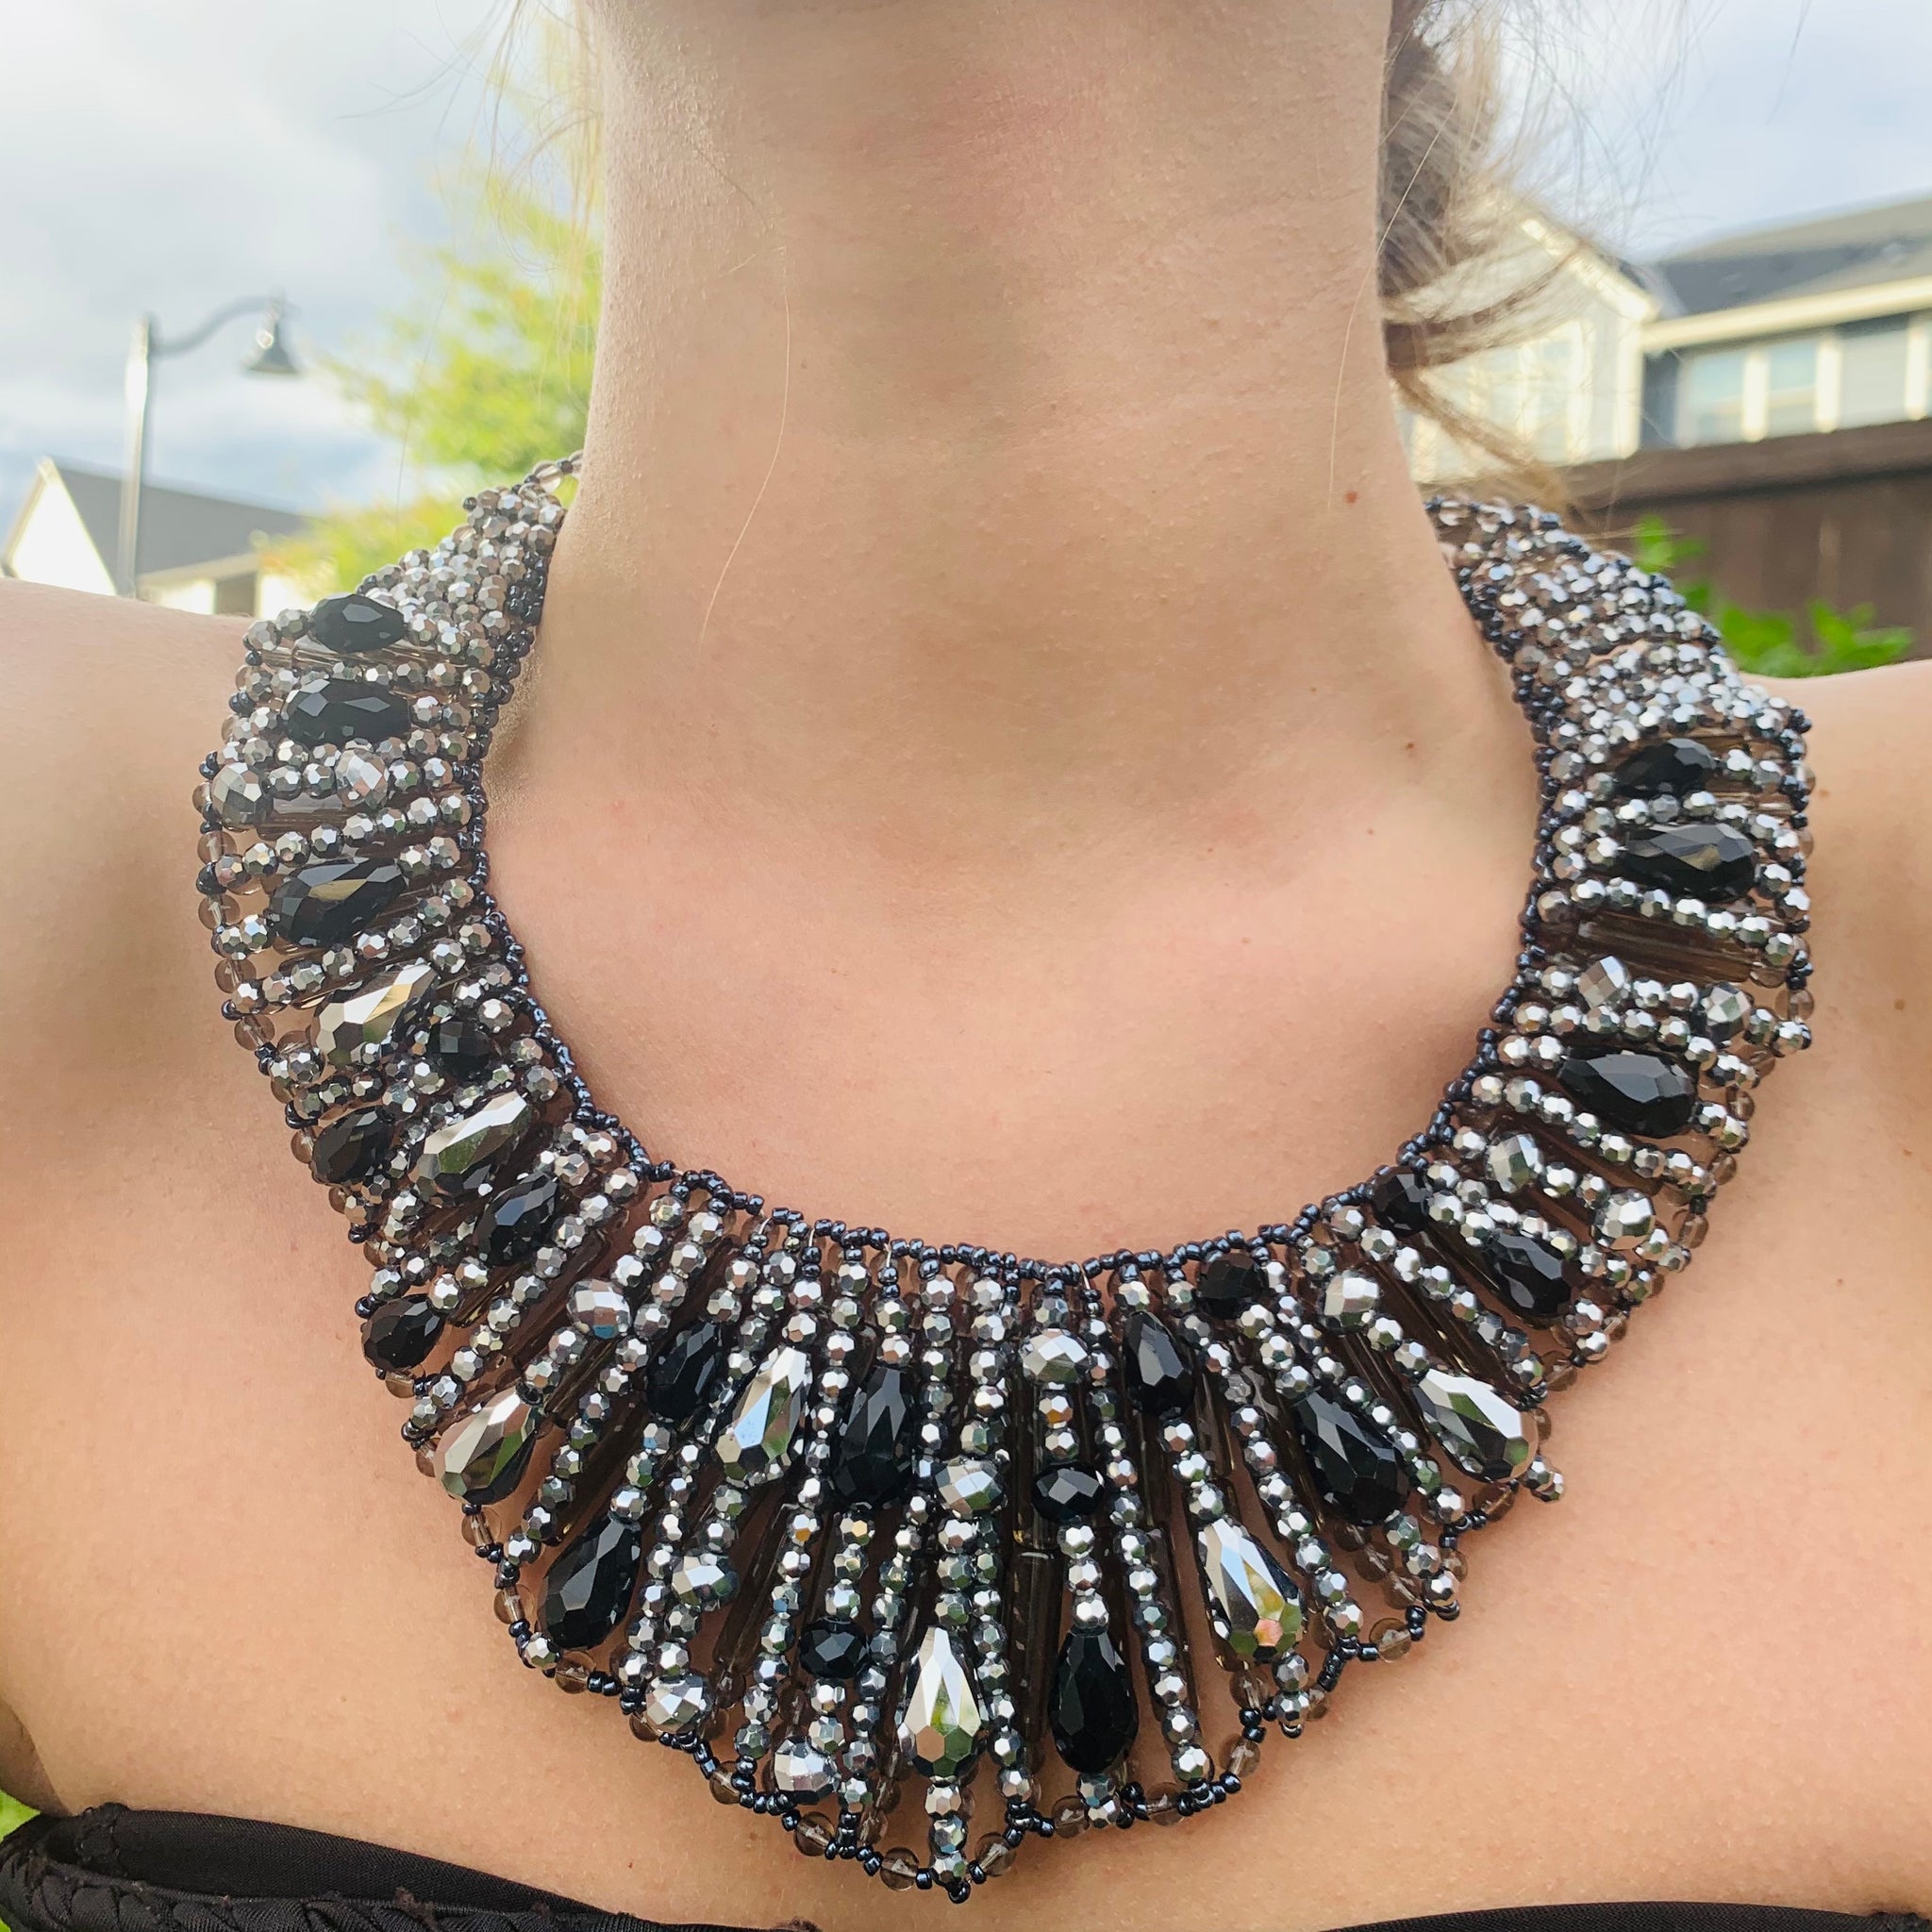 Handmade Neck Wrap 20" Metallic Chic Onyx Hematite Beads Collar Choker Necklace